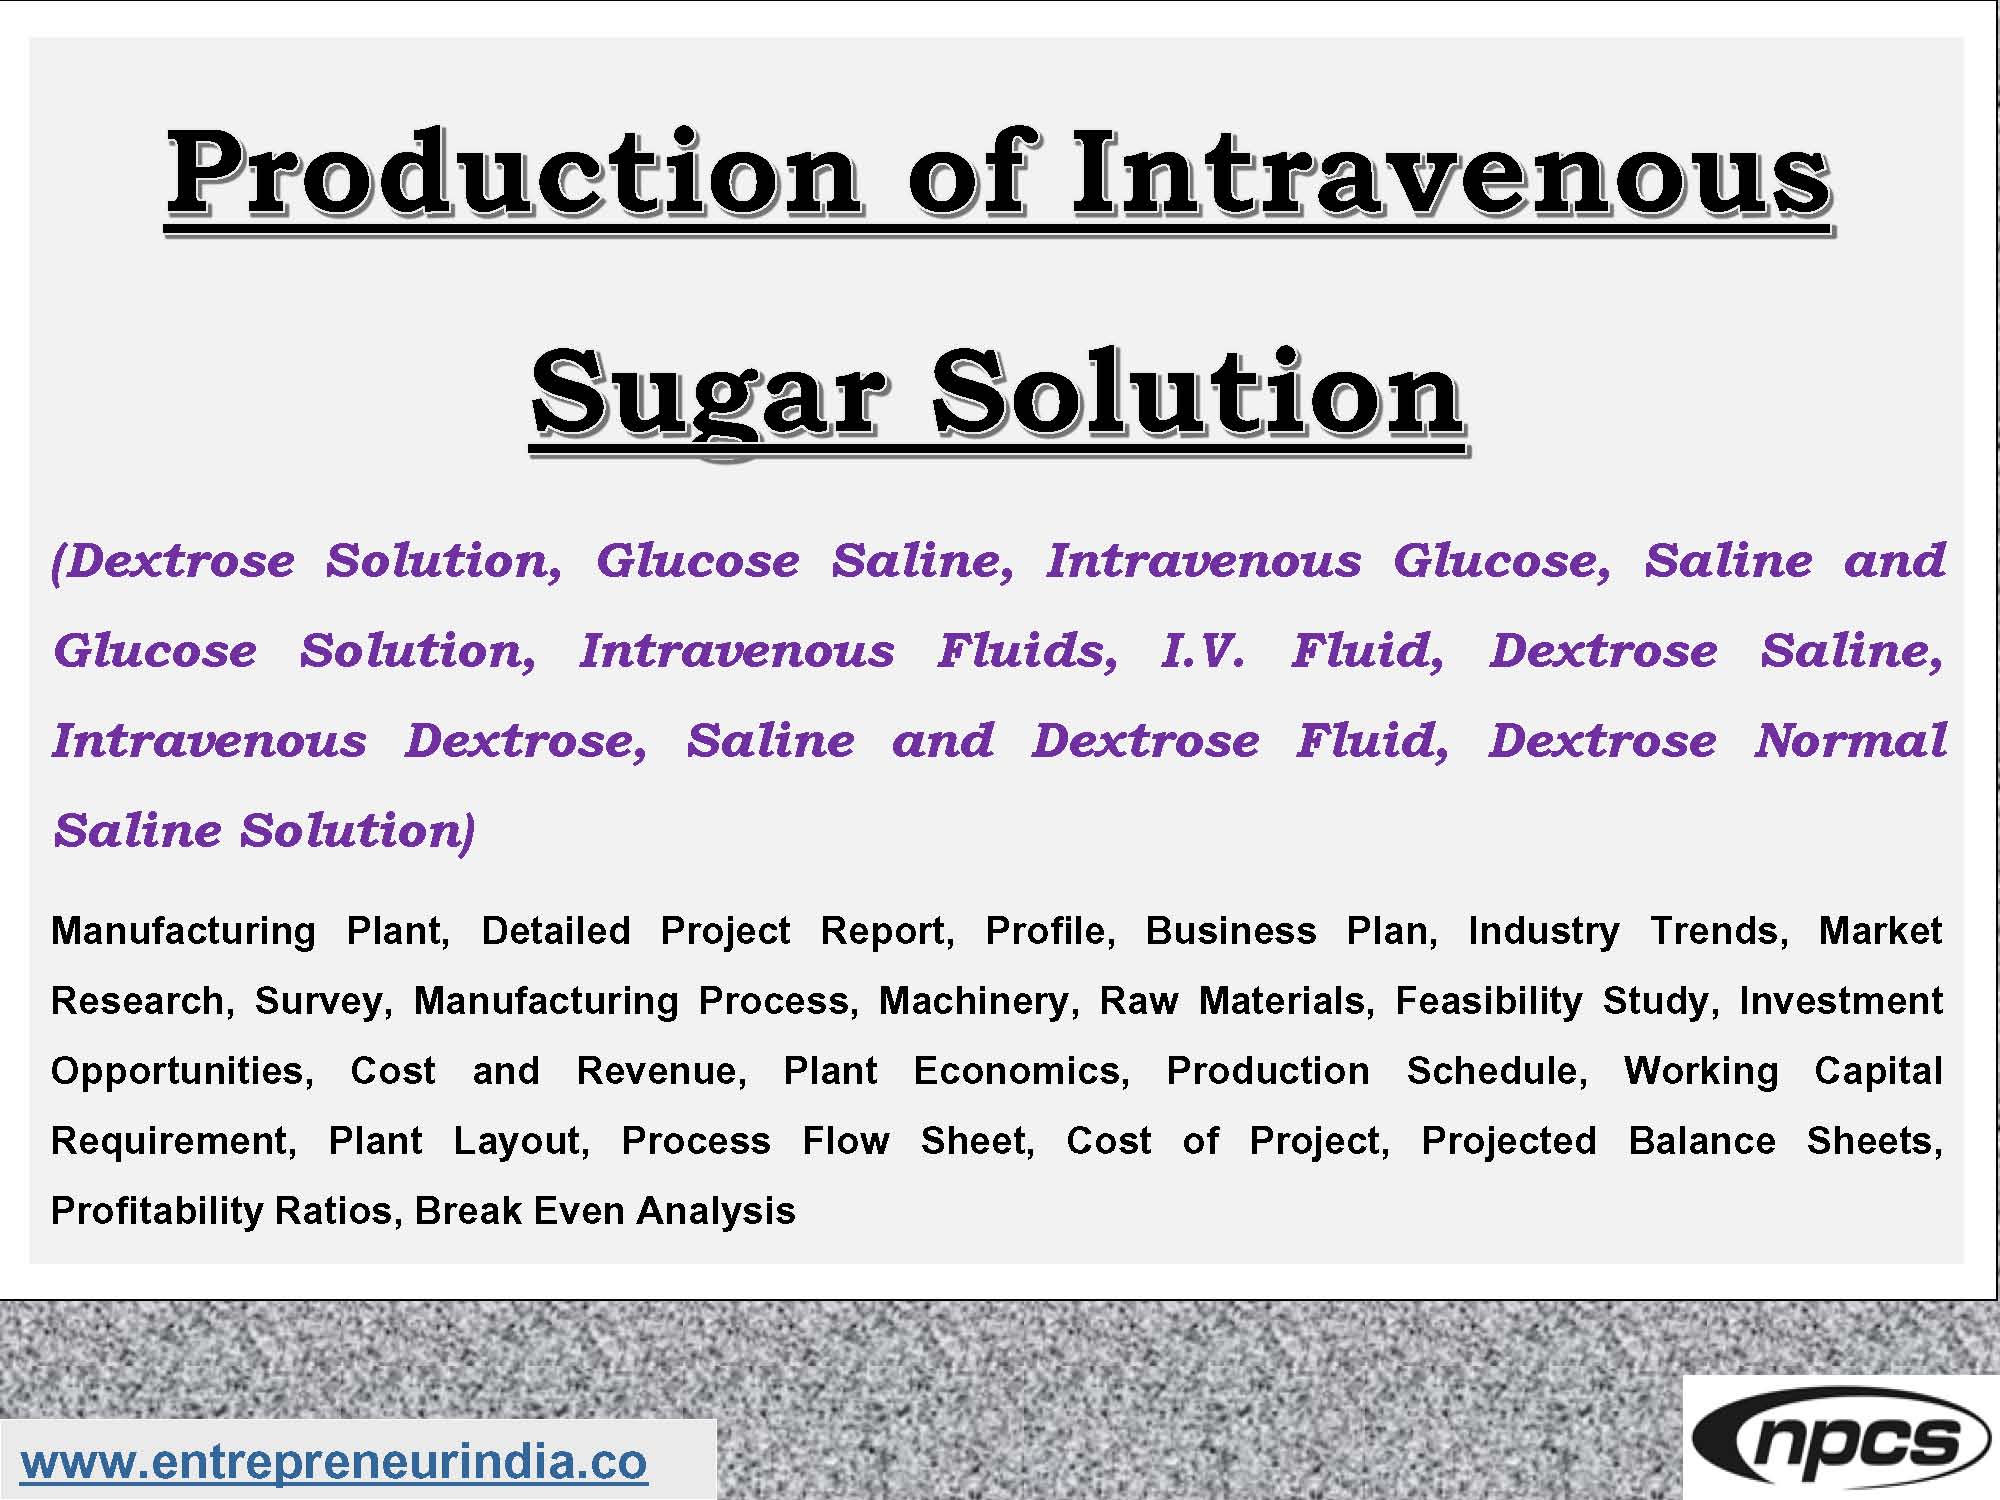 Production of Intravenous Sugar Solution